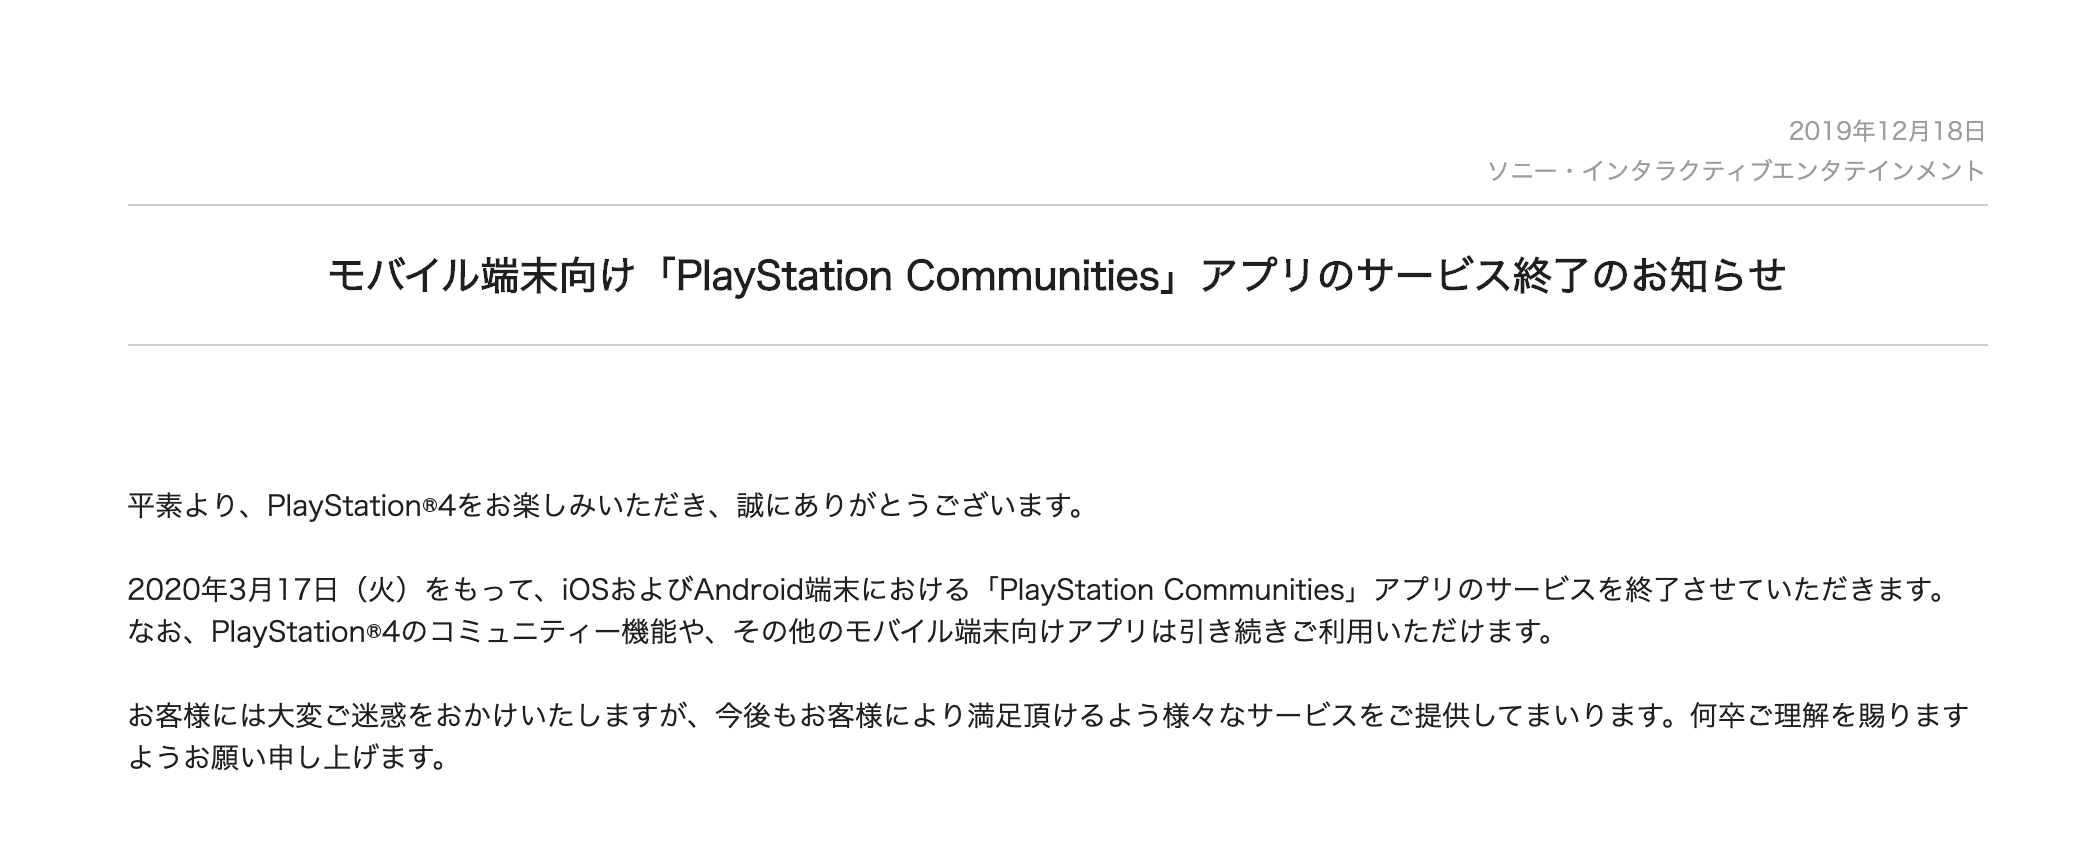 PlayStation Communities